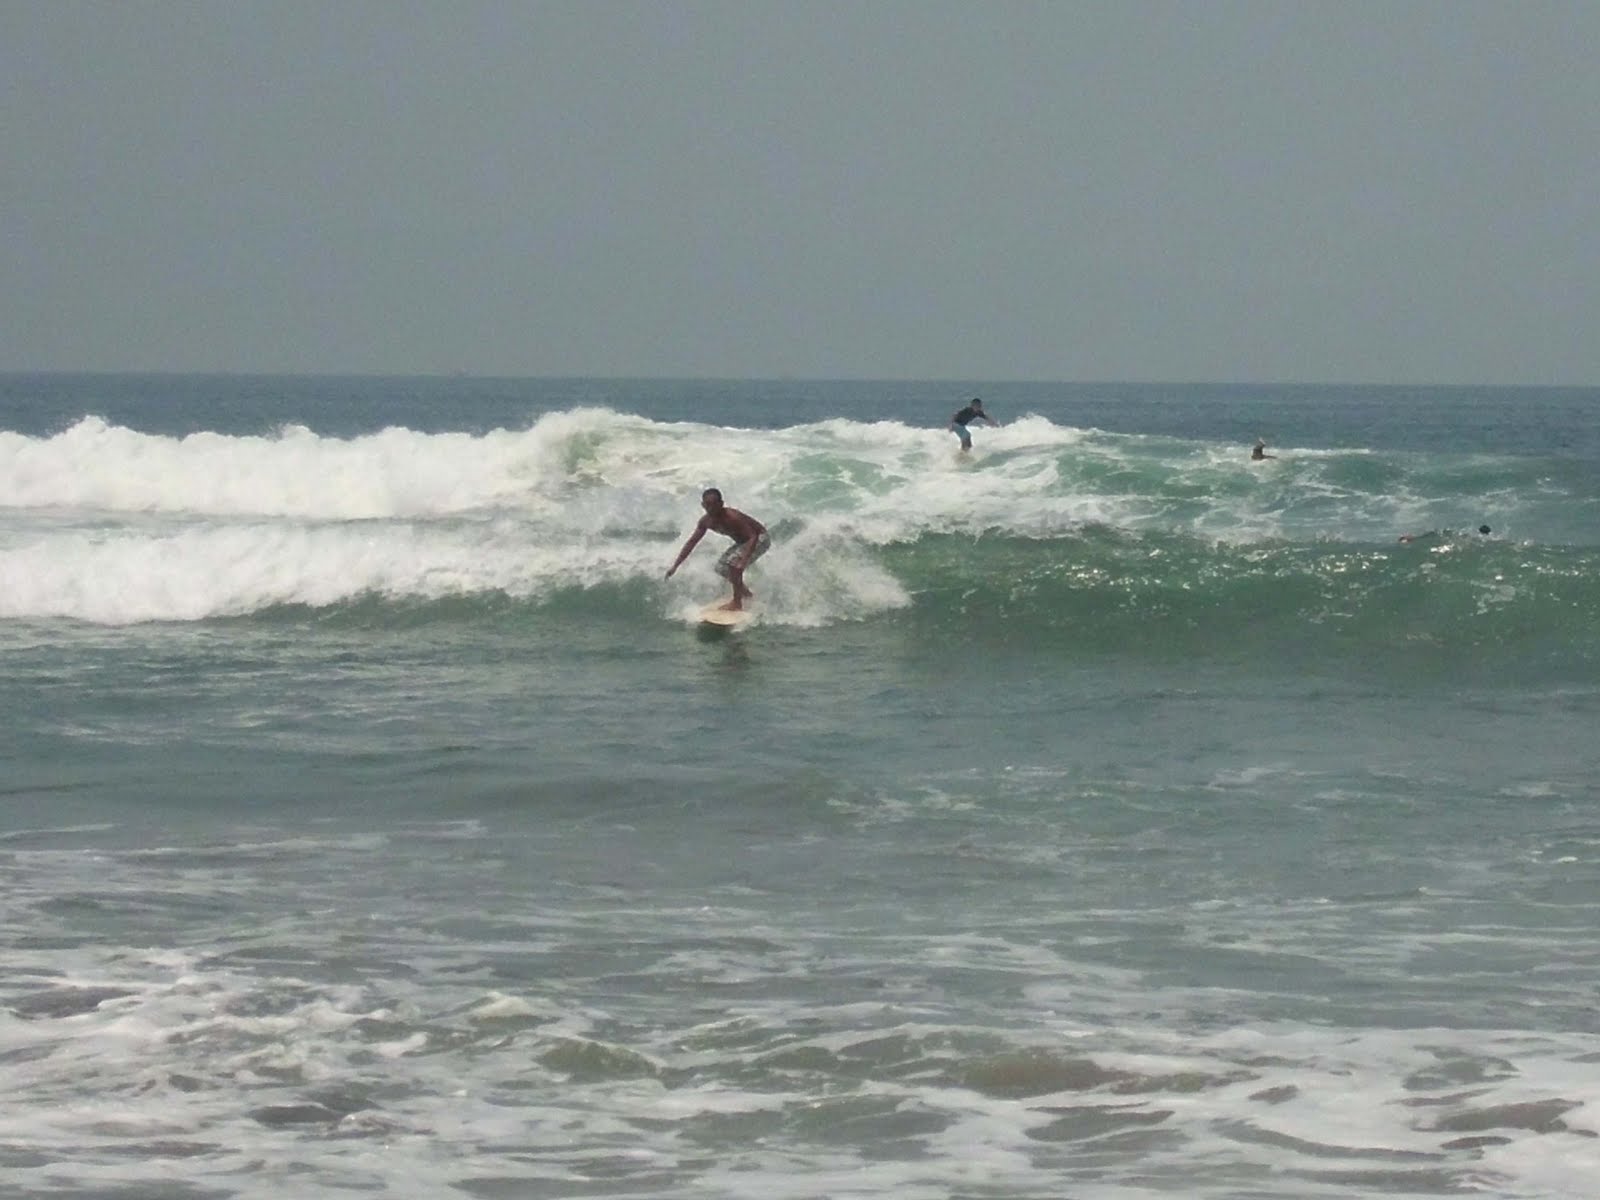 Indonesi@nthology: Wanna surf? Try Karanghawu Beach